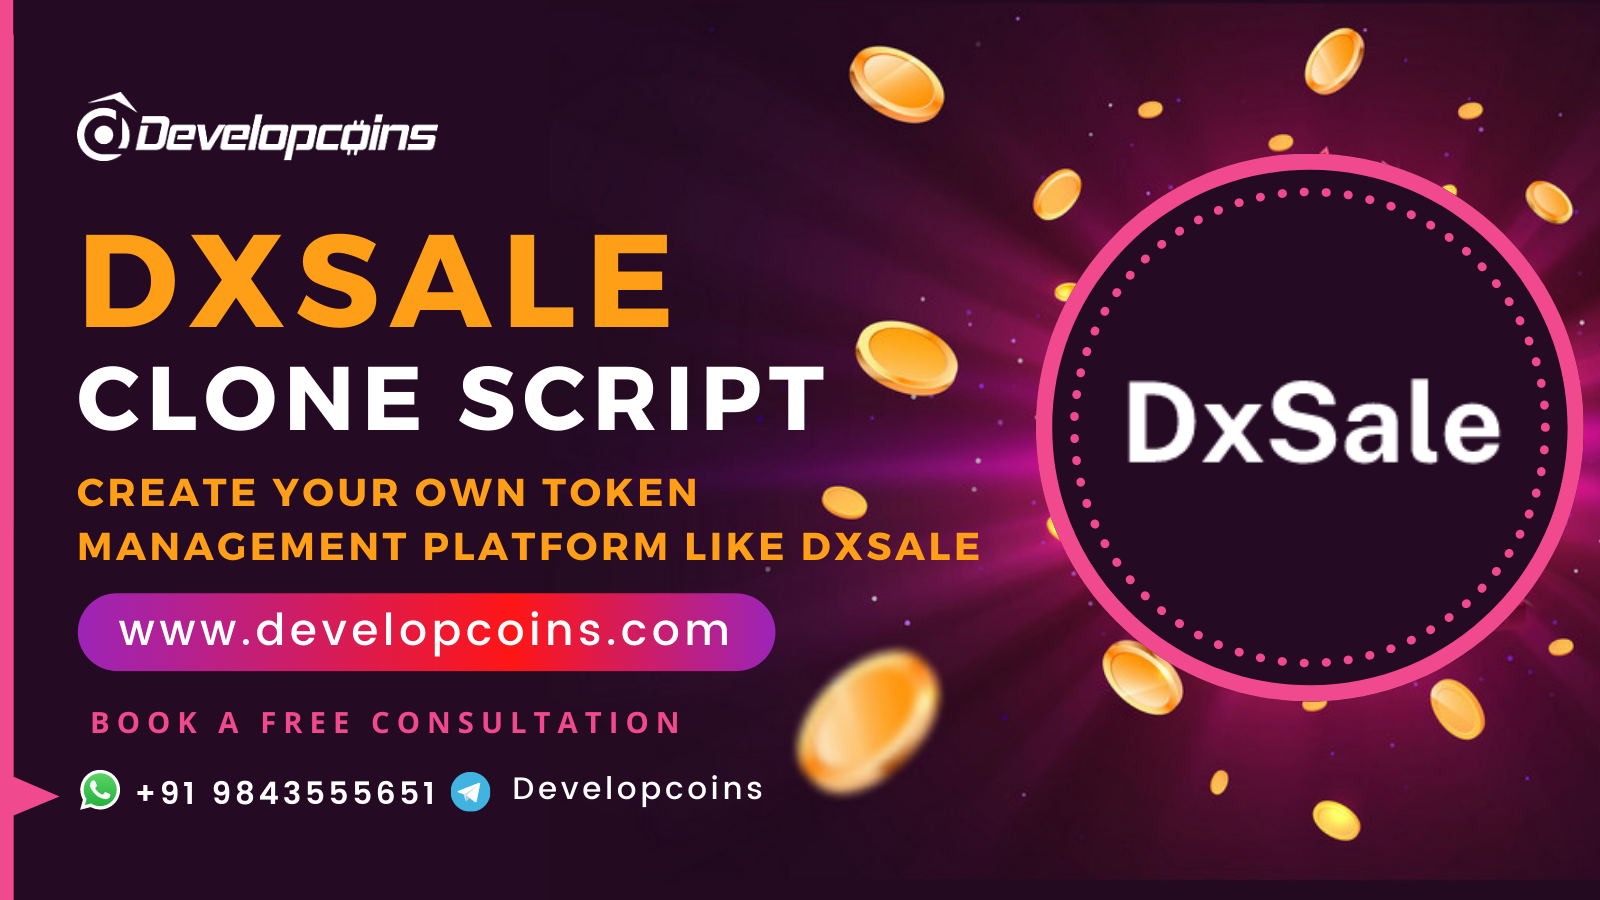 DxSale Clone Script To Create Token Sale Platform Like DxSale